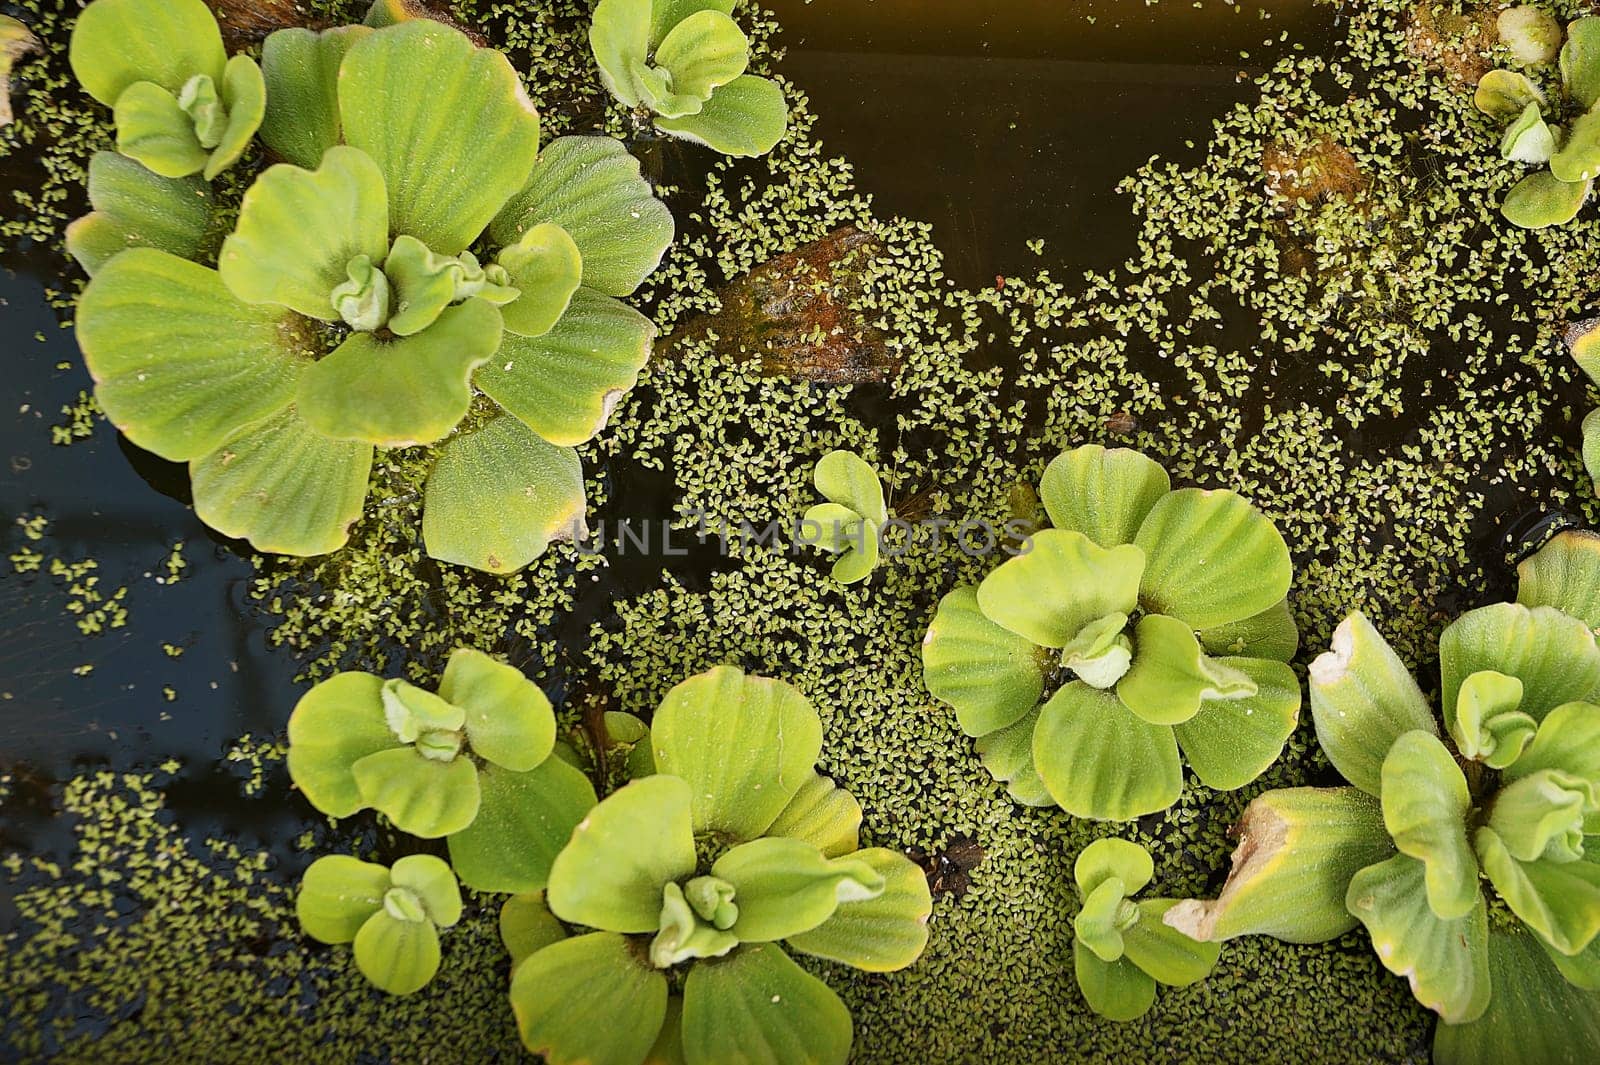 Water rose Pistia in a pond close-up, ornamental aquatic plant by Annado